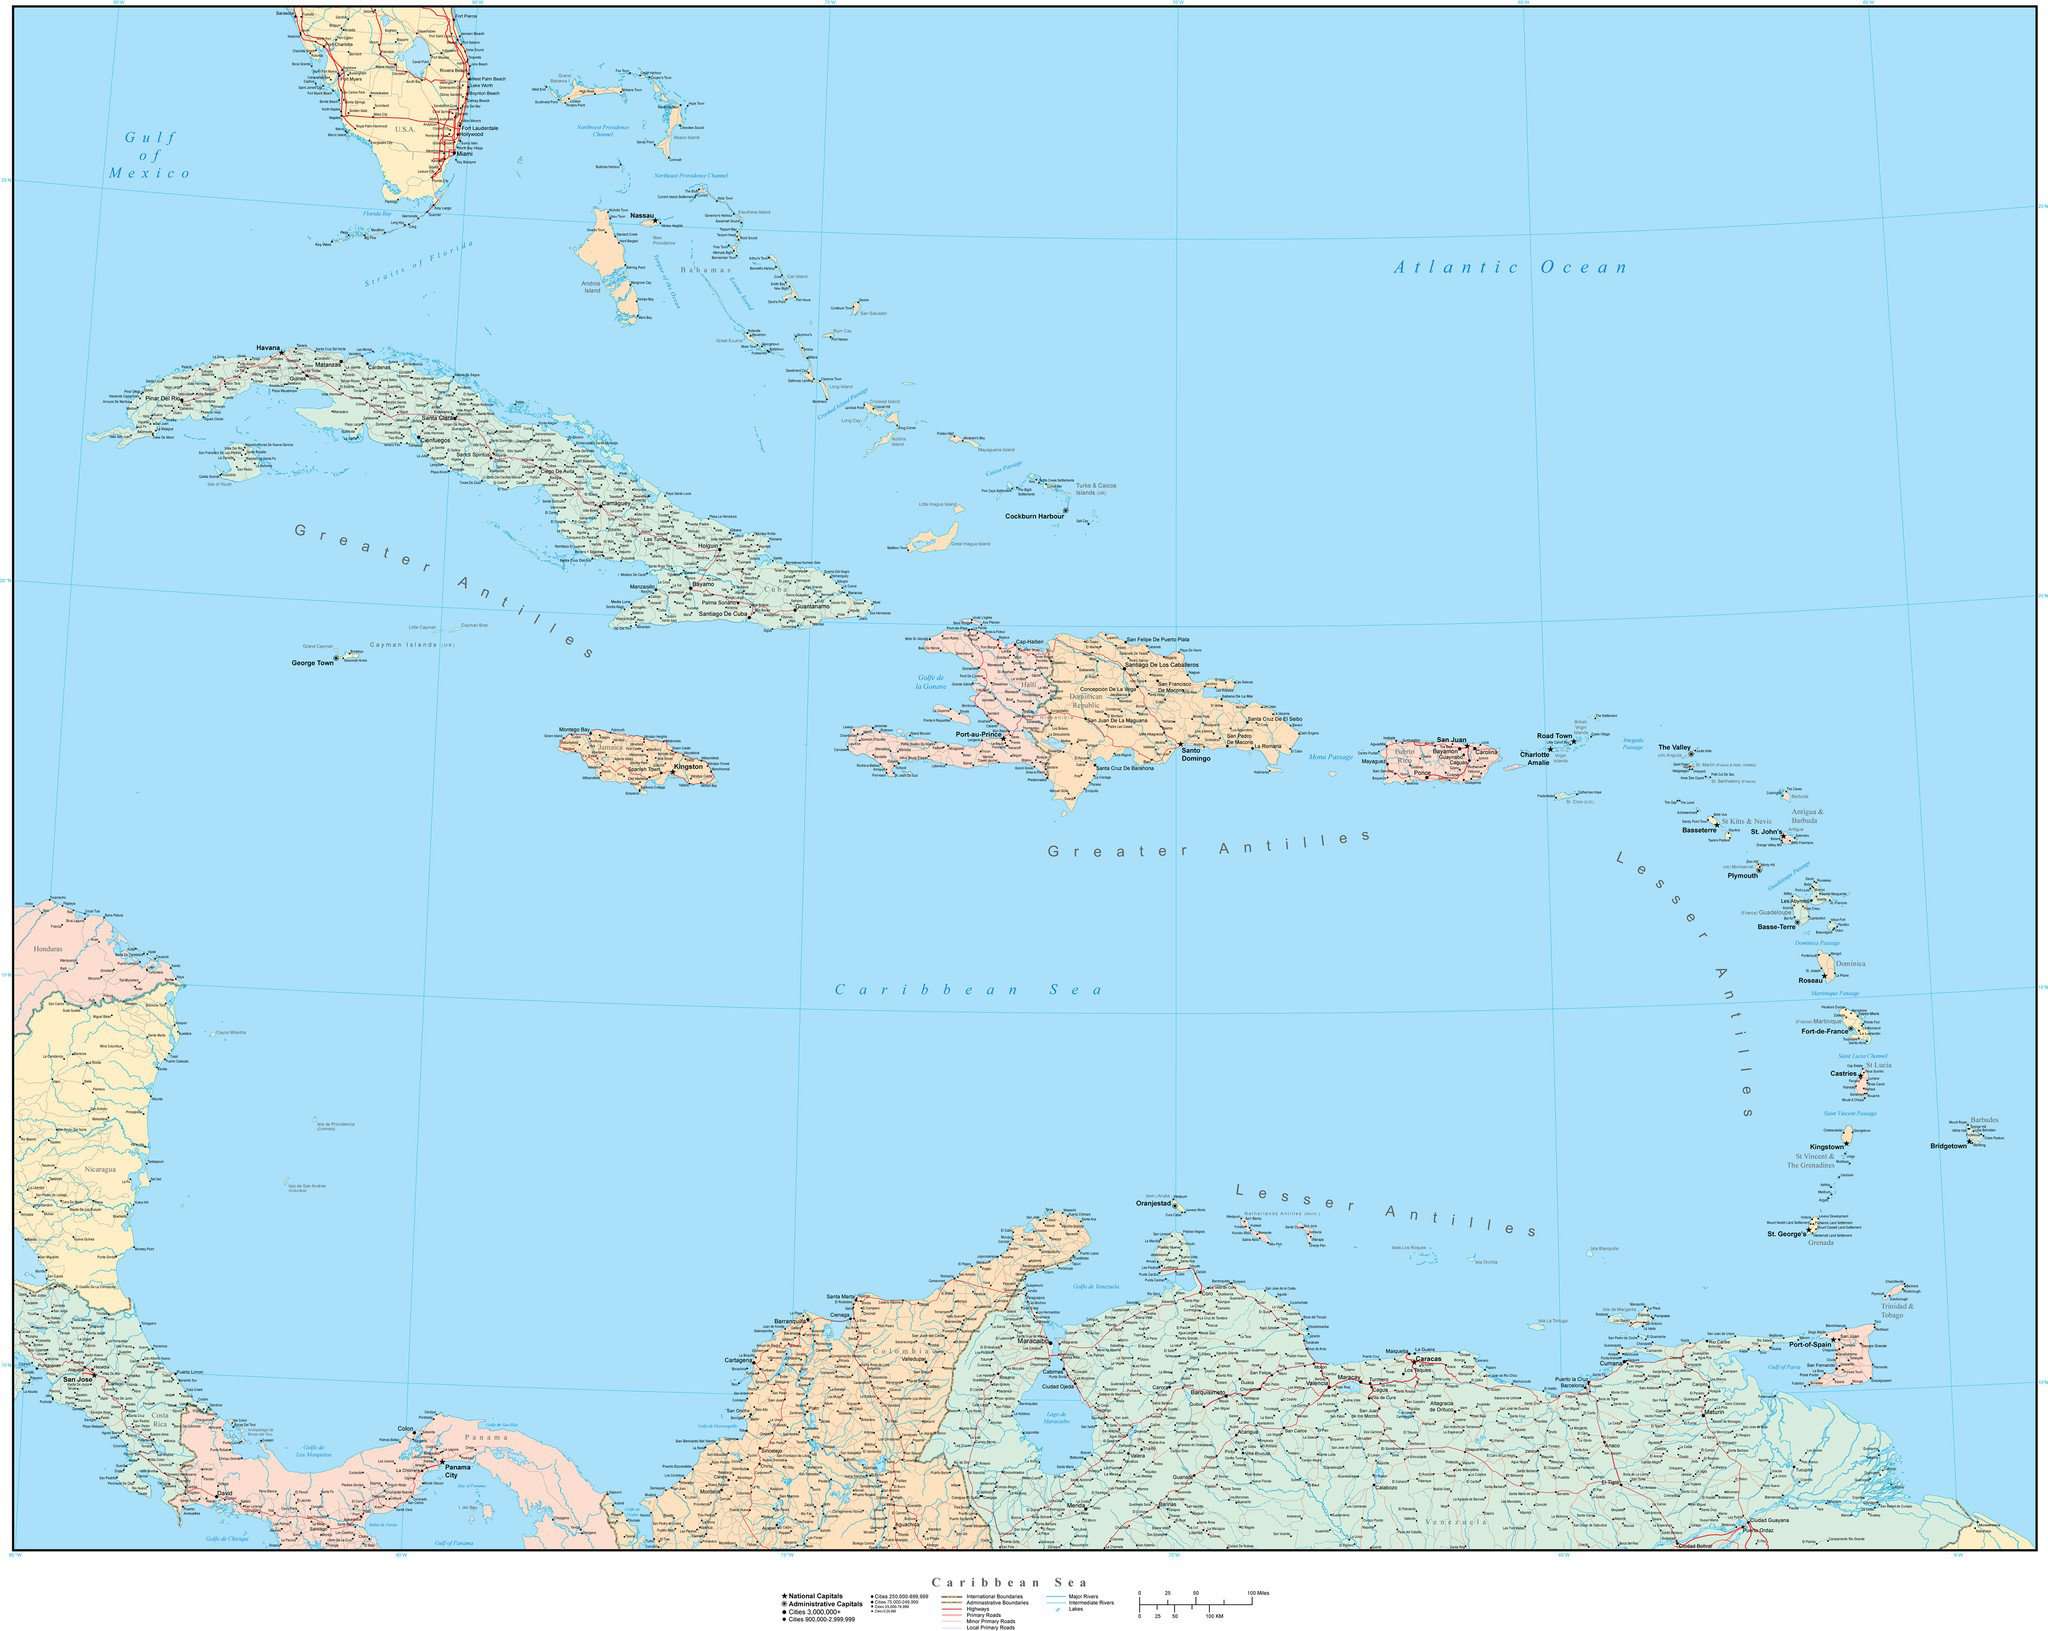 Digital Caribbean Sea Map - Adobe Illustrator Format